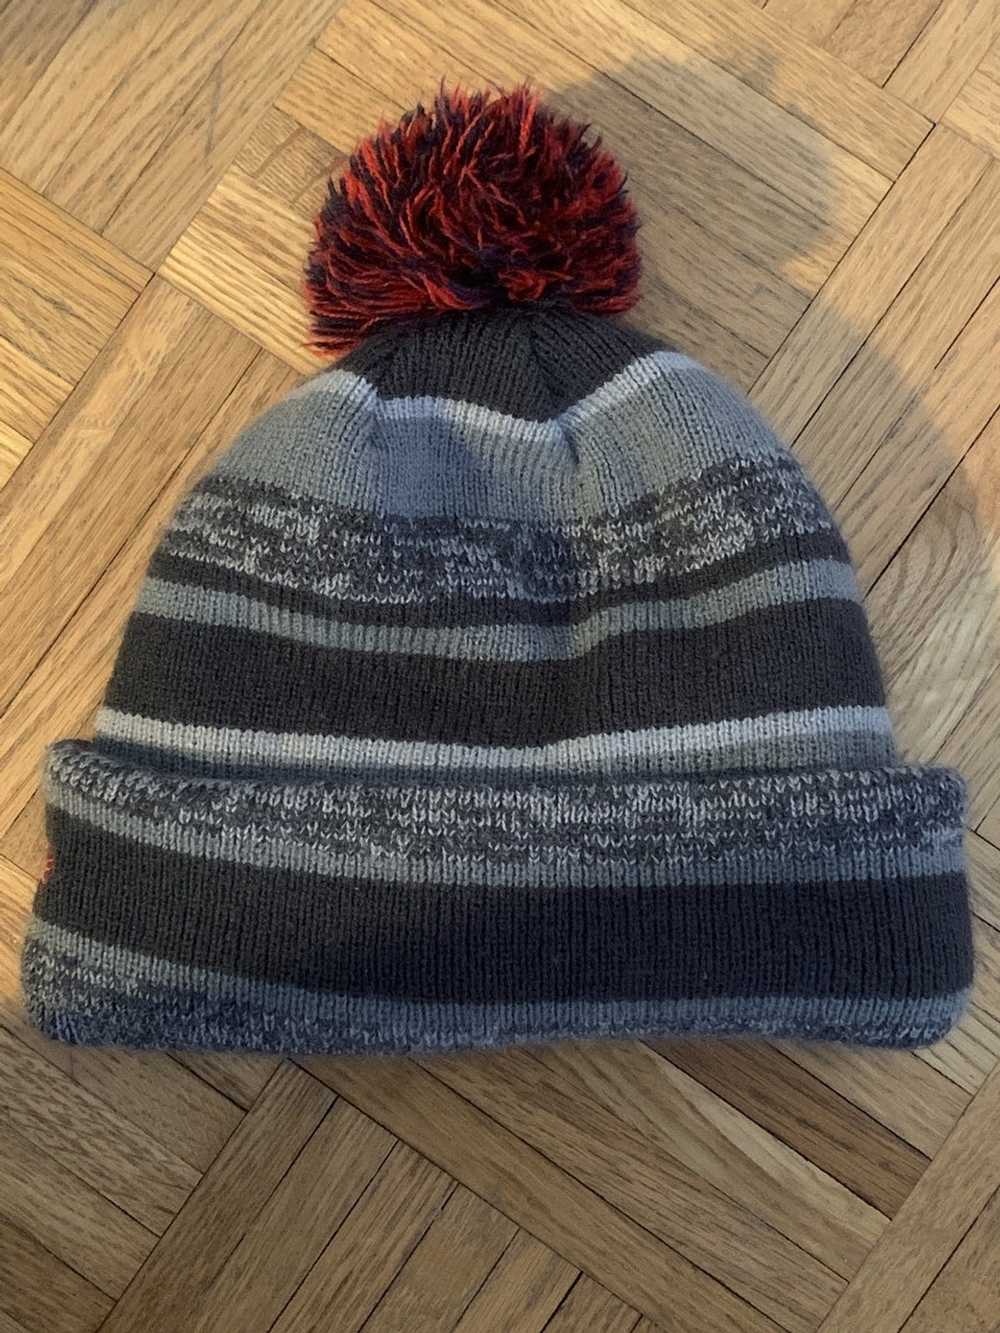 New Era New England Patriots winter hat with Pom … - image 2